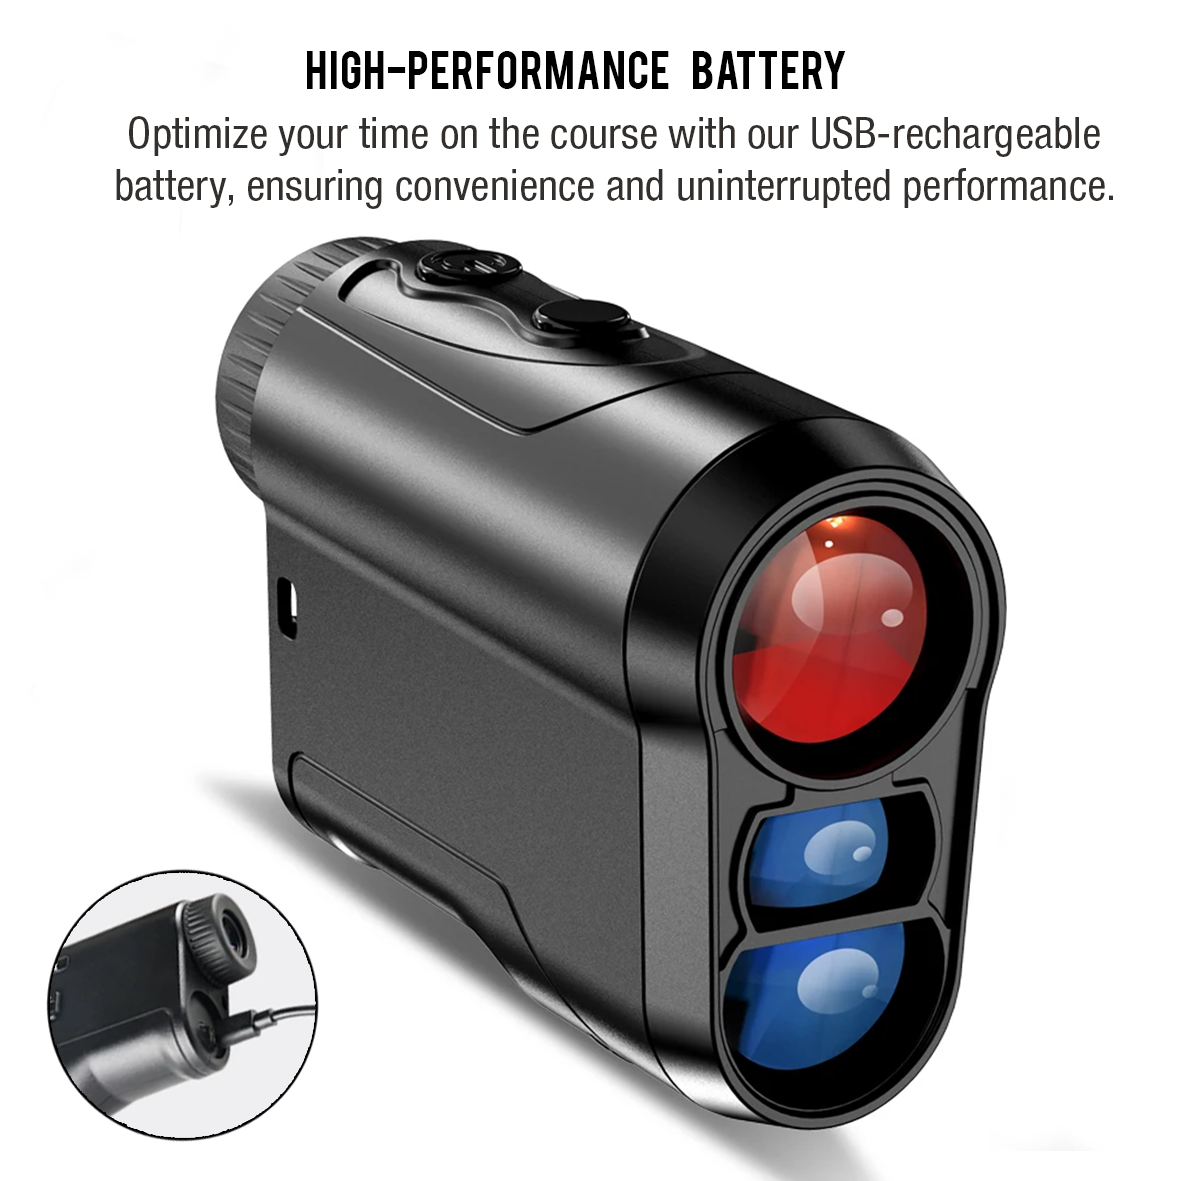 Golf Laser Rangefinder REVASRI 1000M with Slope Compensation and Flagpole Lock Vibration